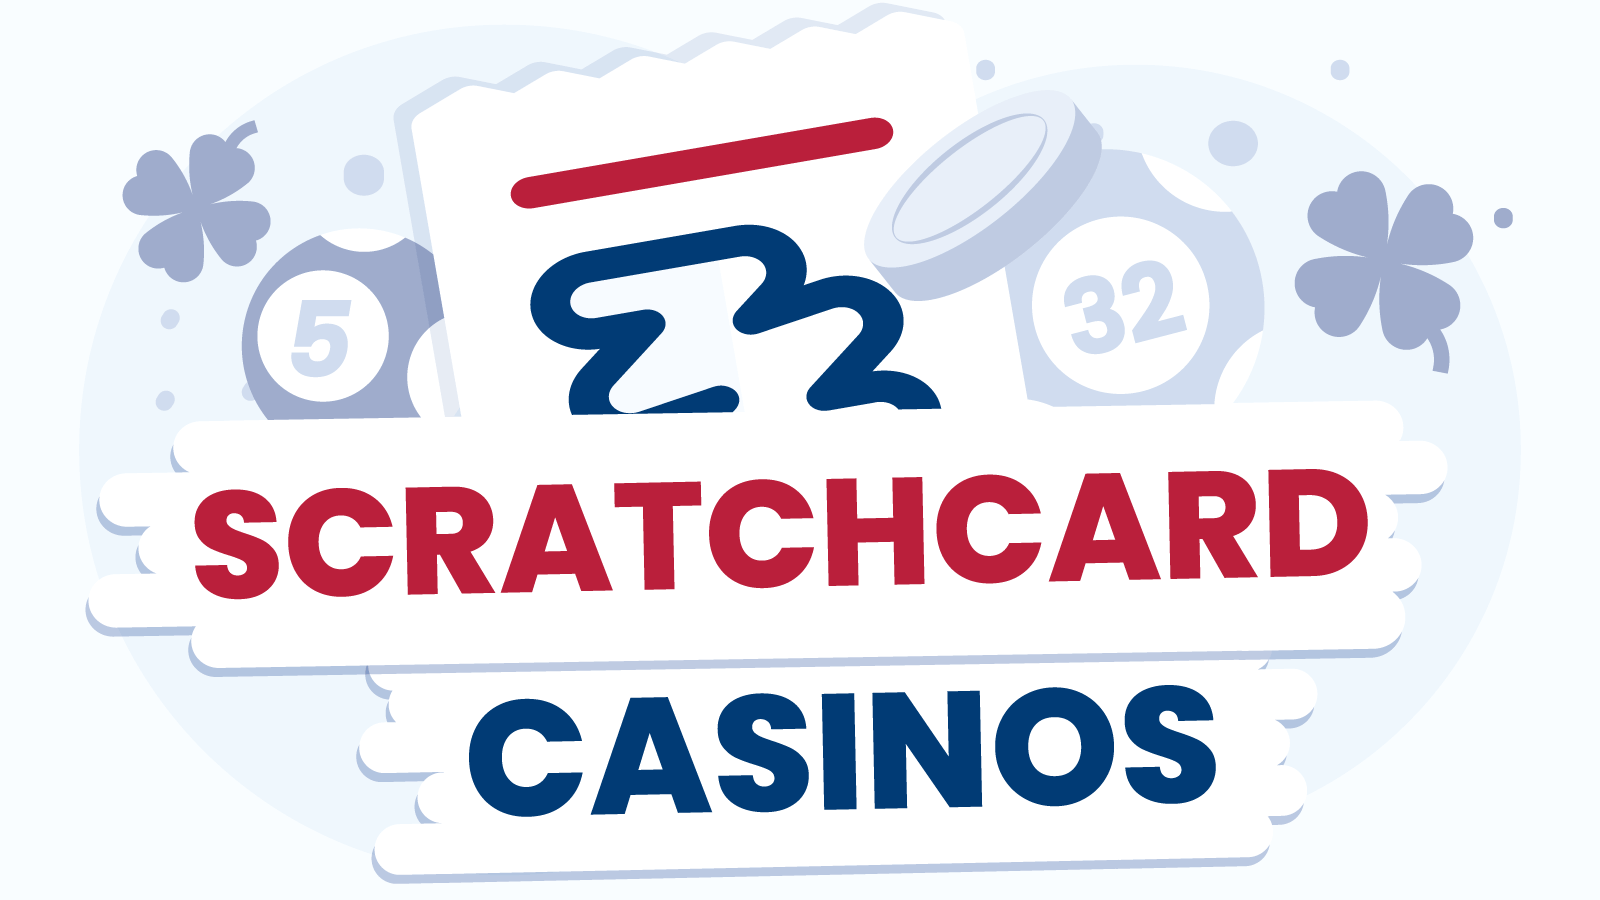 Scratchcard Casinos